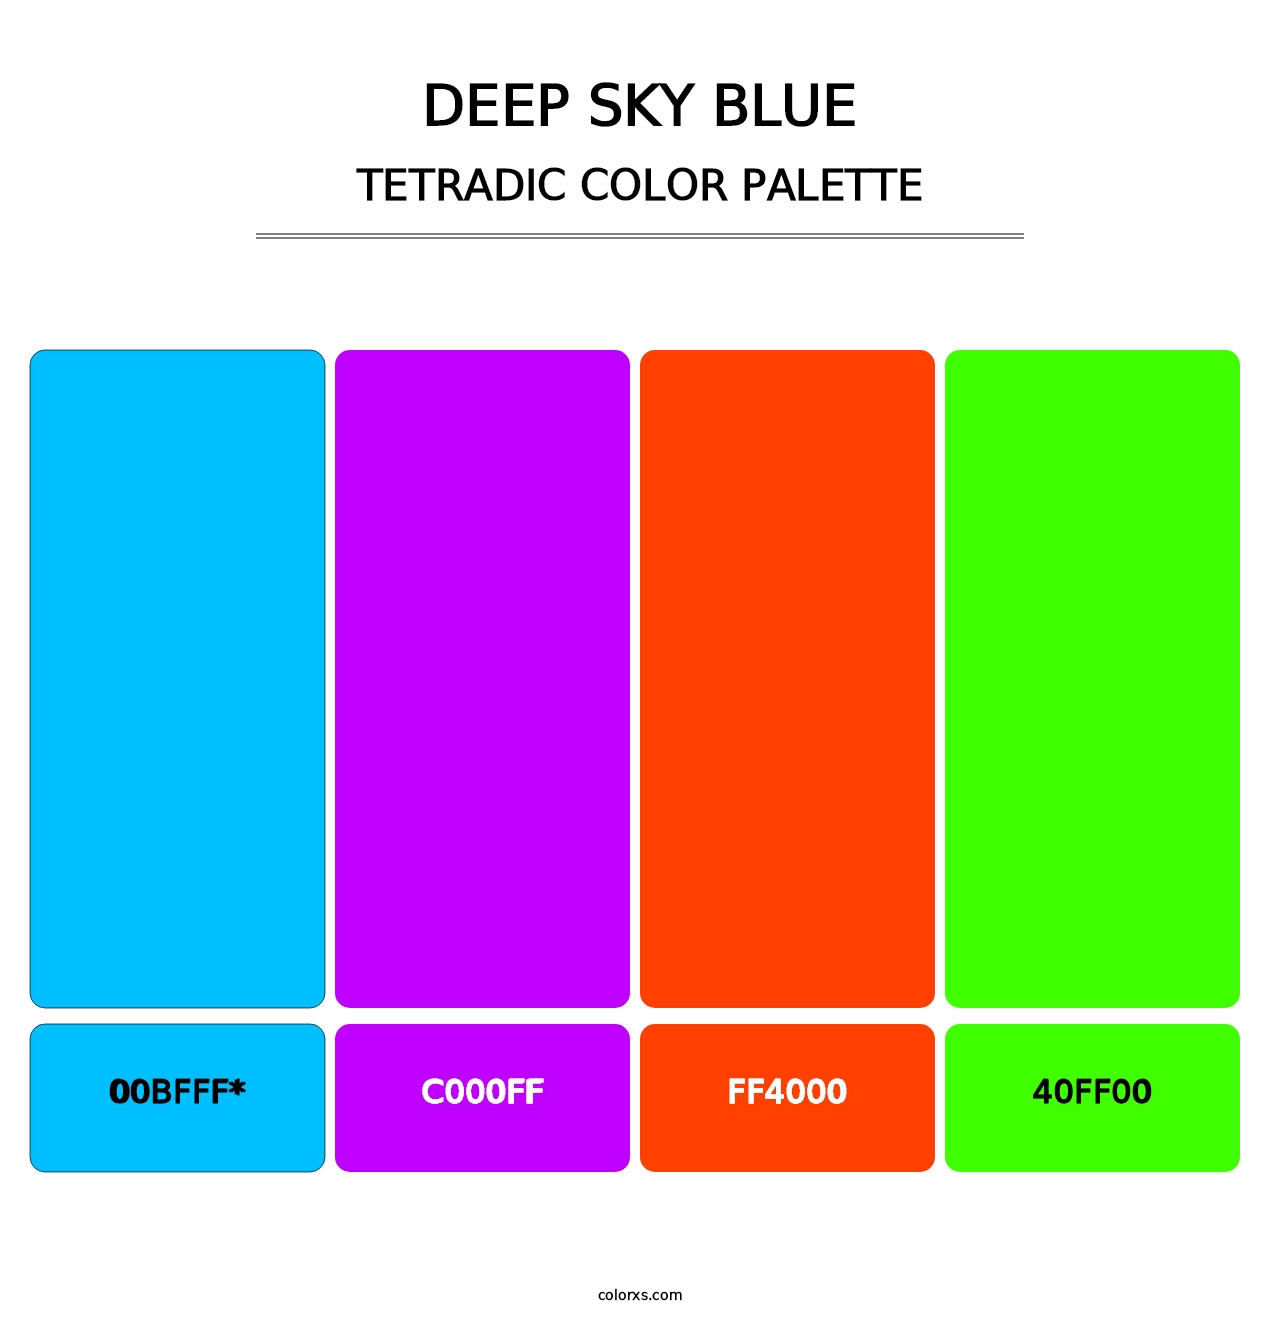 Deep Sky Blue - Tetradic Color Palette